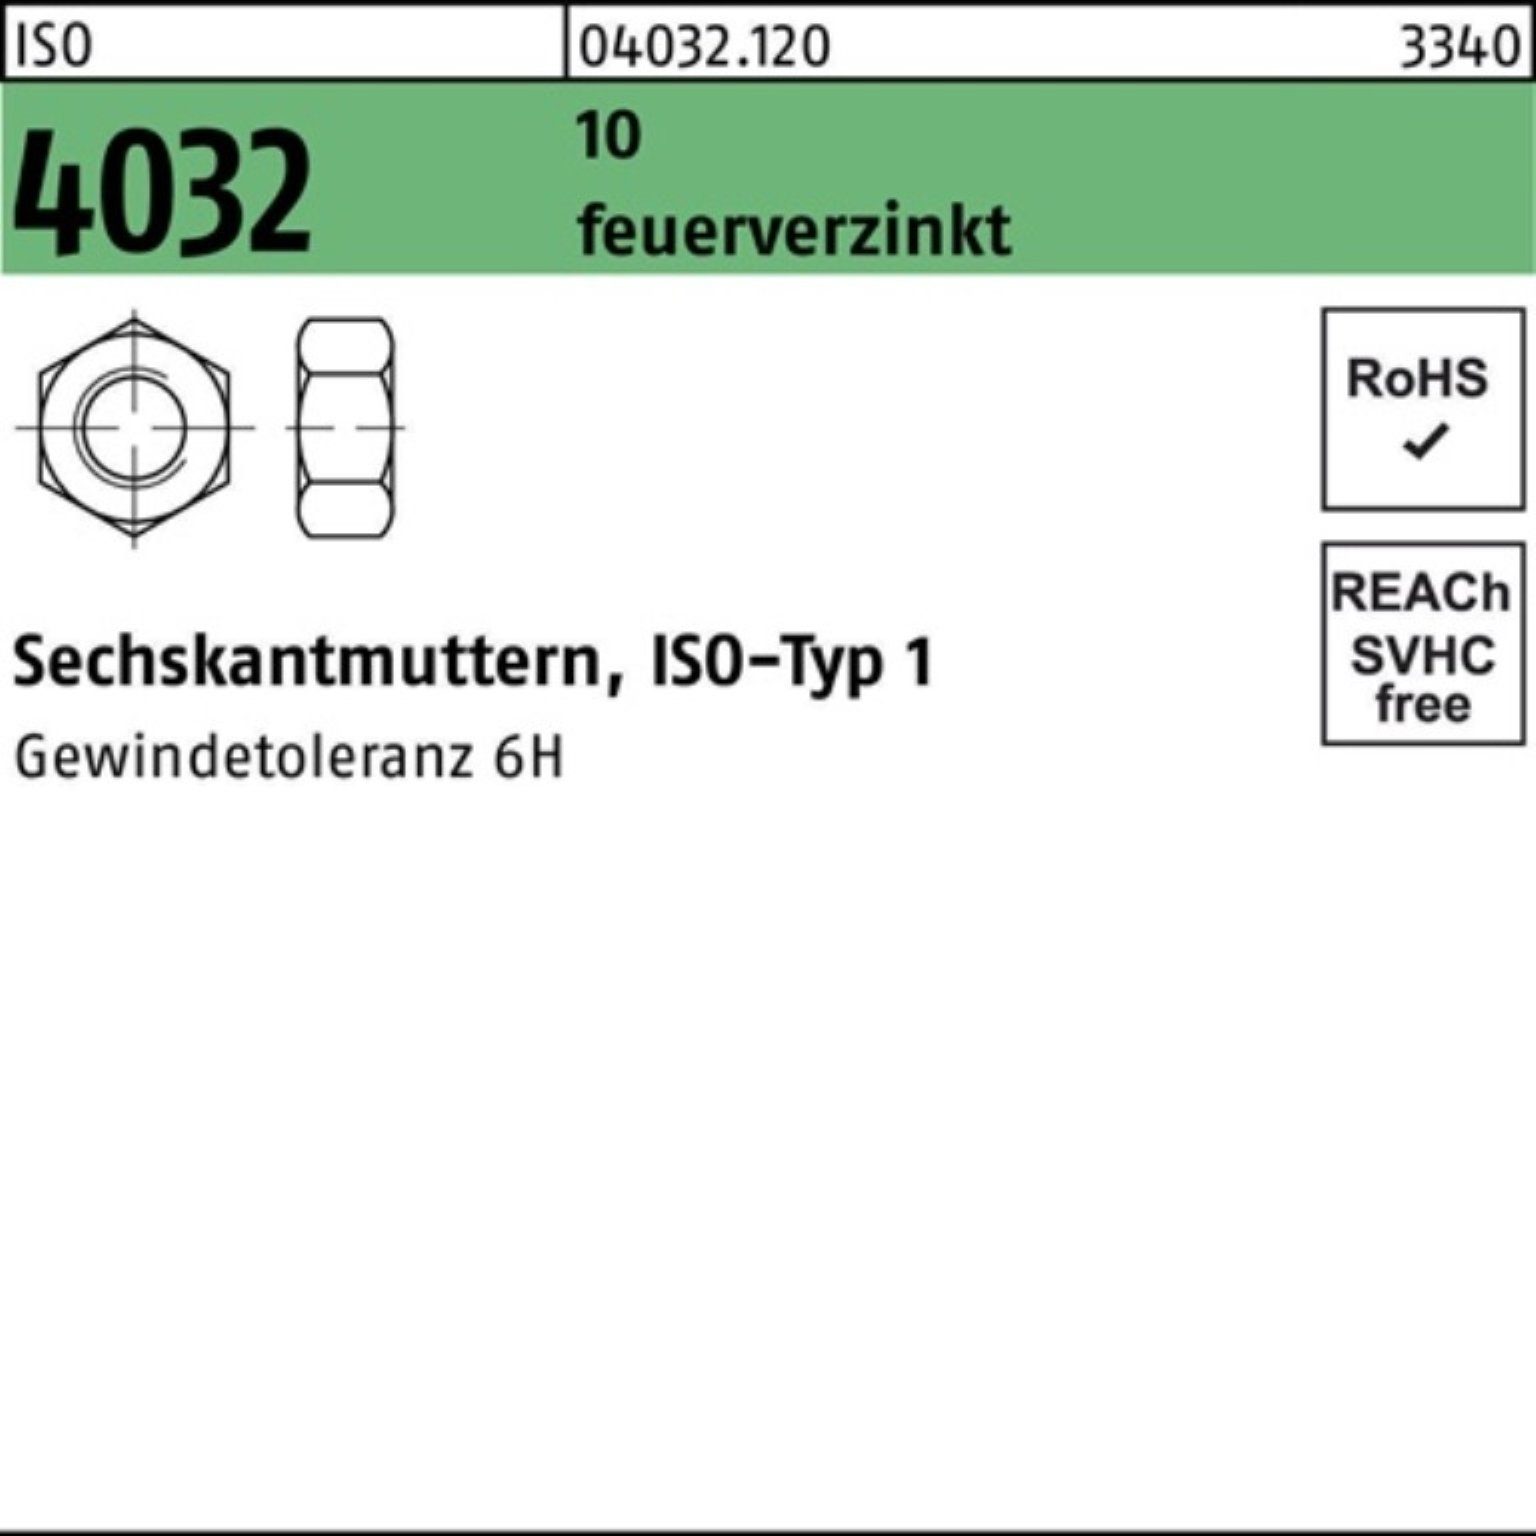 ISO feuerverz. 10 Bufab 4032 Stück ISO Pack Muttern Sechskantmutter 100er 403 1 M48